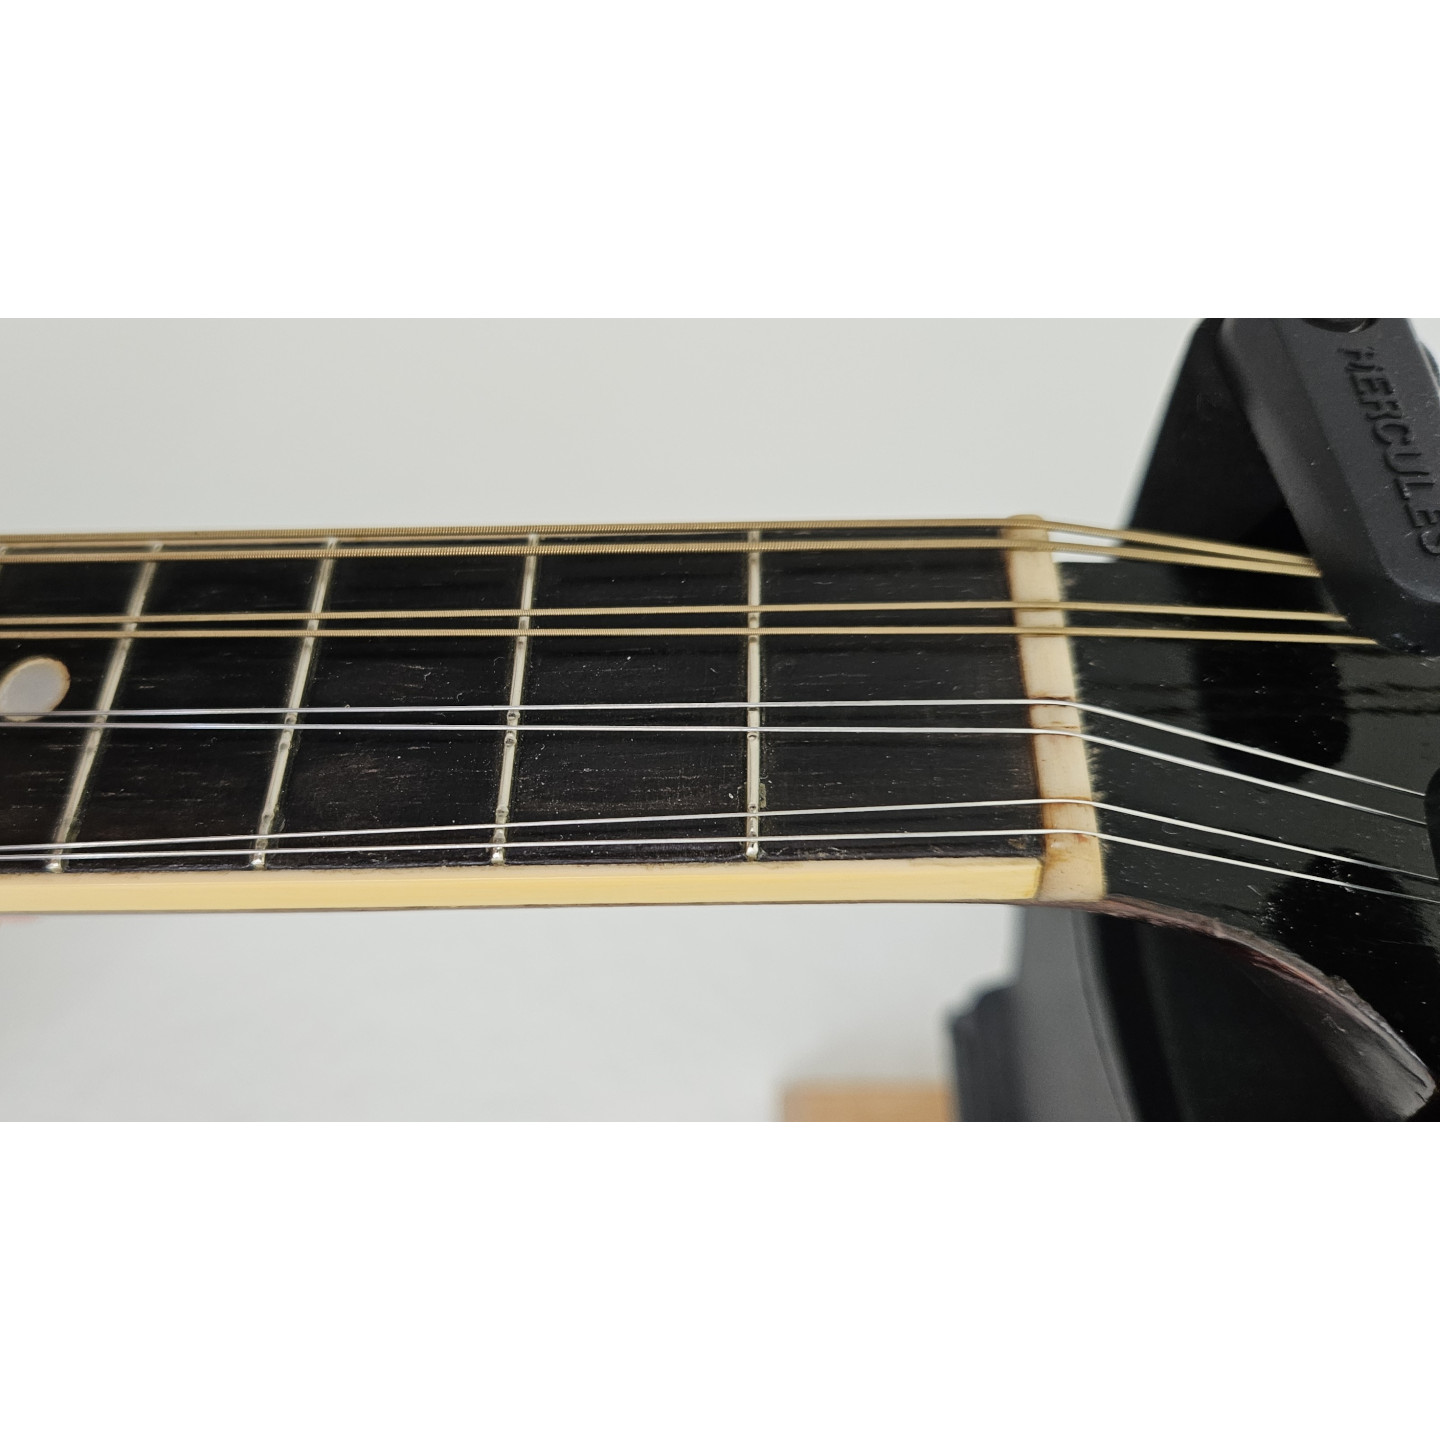 1913 The Gibson A-1 Mandolin Pumpkin Top Vintage Natural Acoustic Guitar